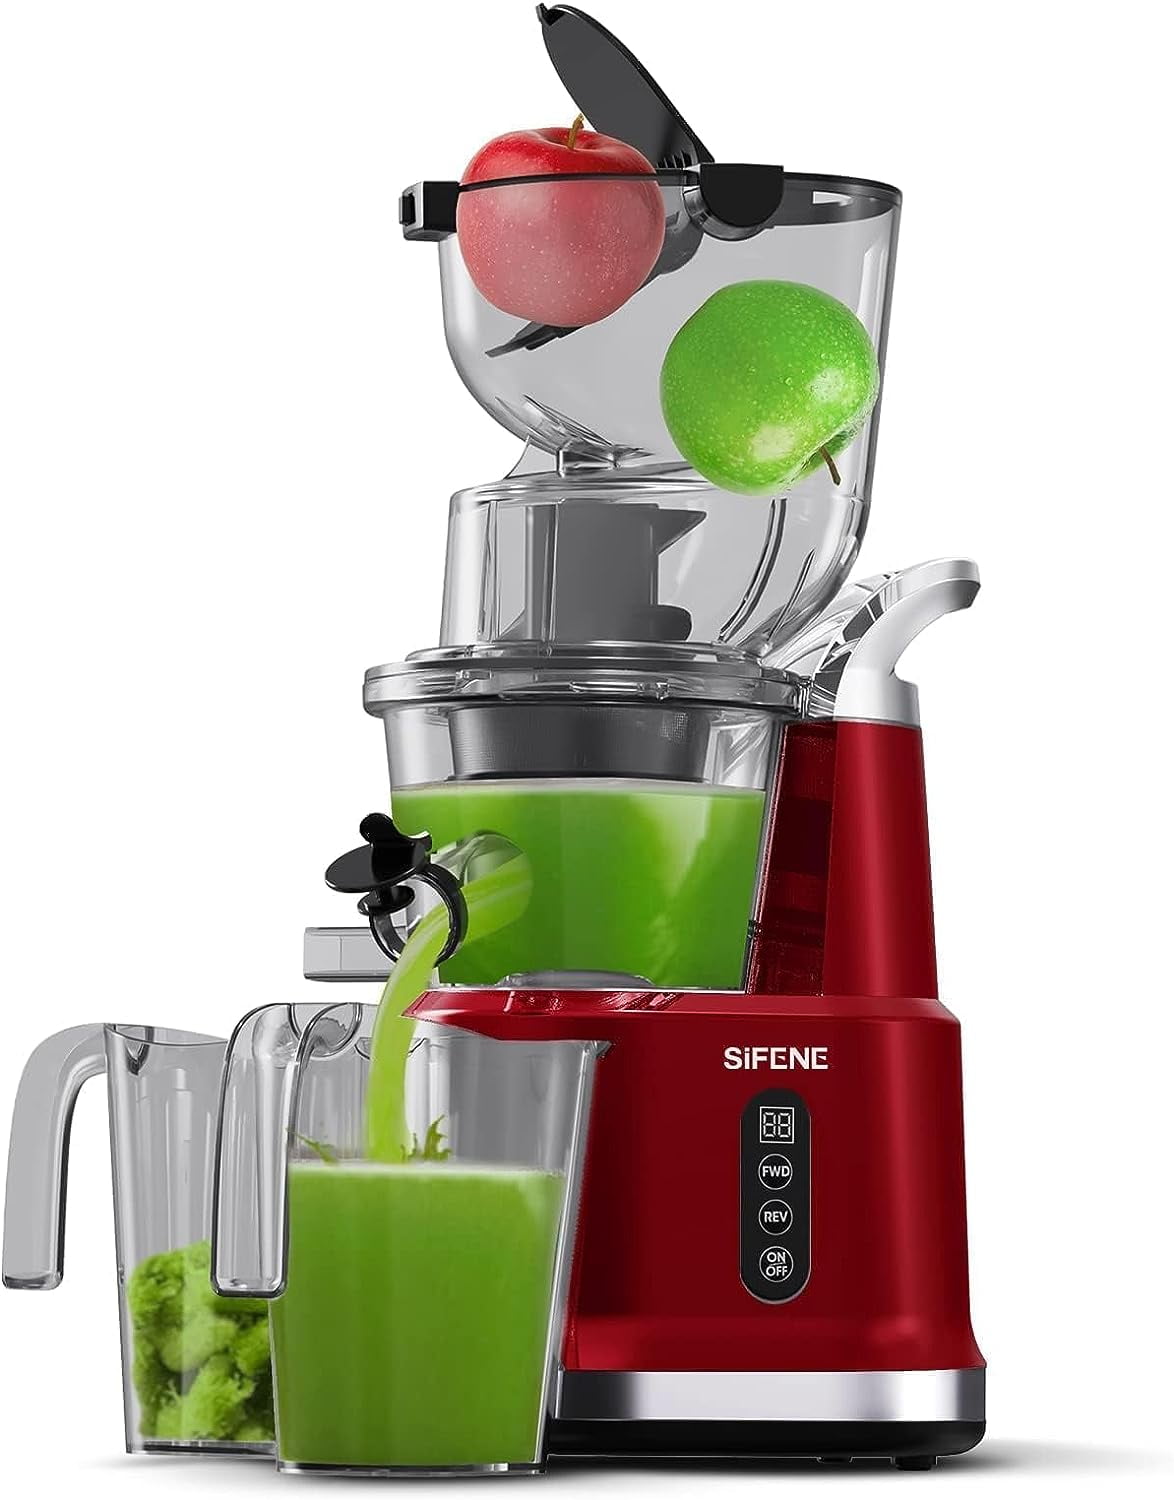 Blender, juicer or slowjuicer: which one do you choose? - Coolblue